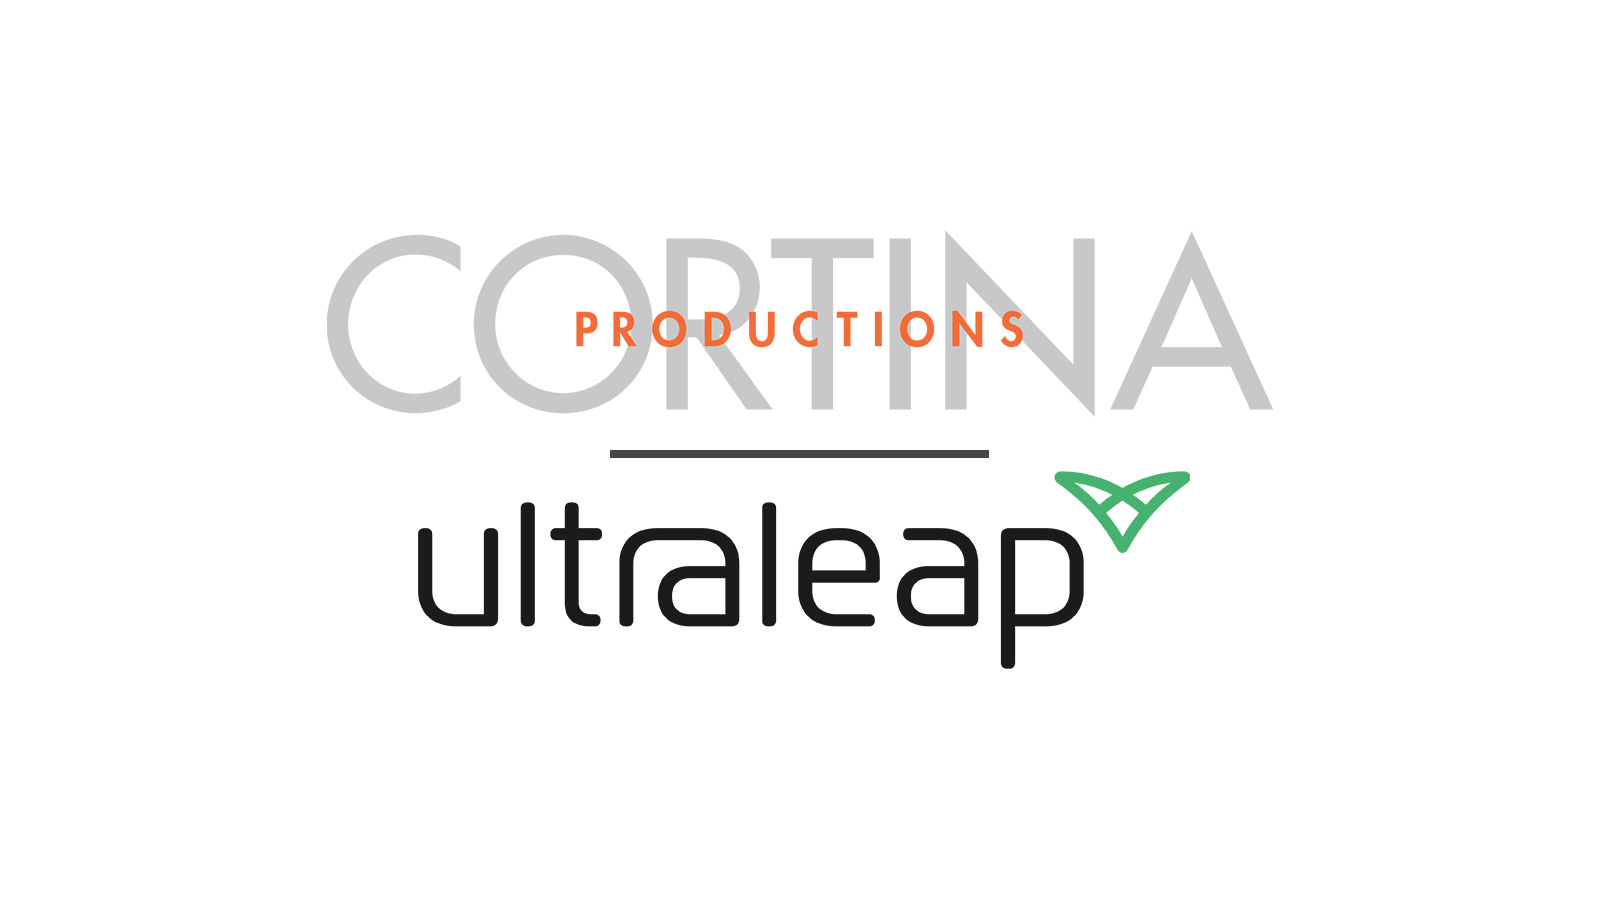 Ultraleap and Cortina Productions logos